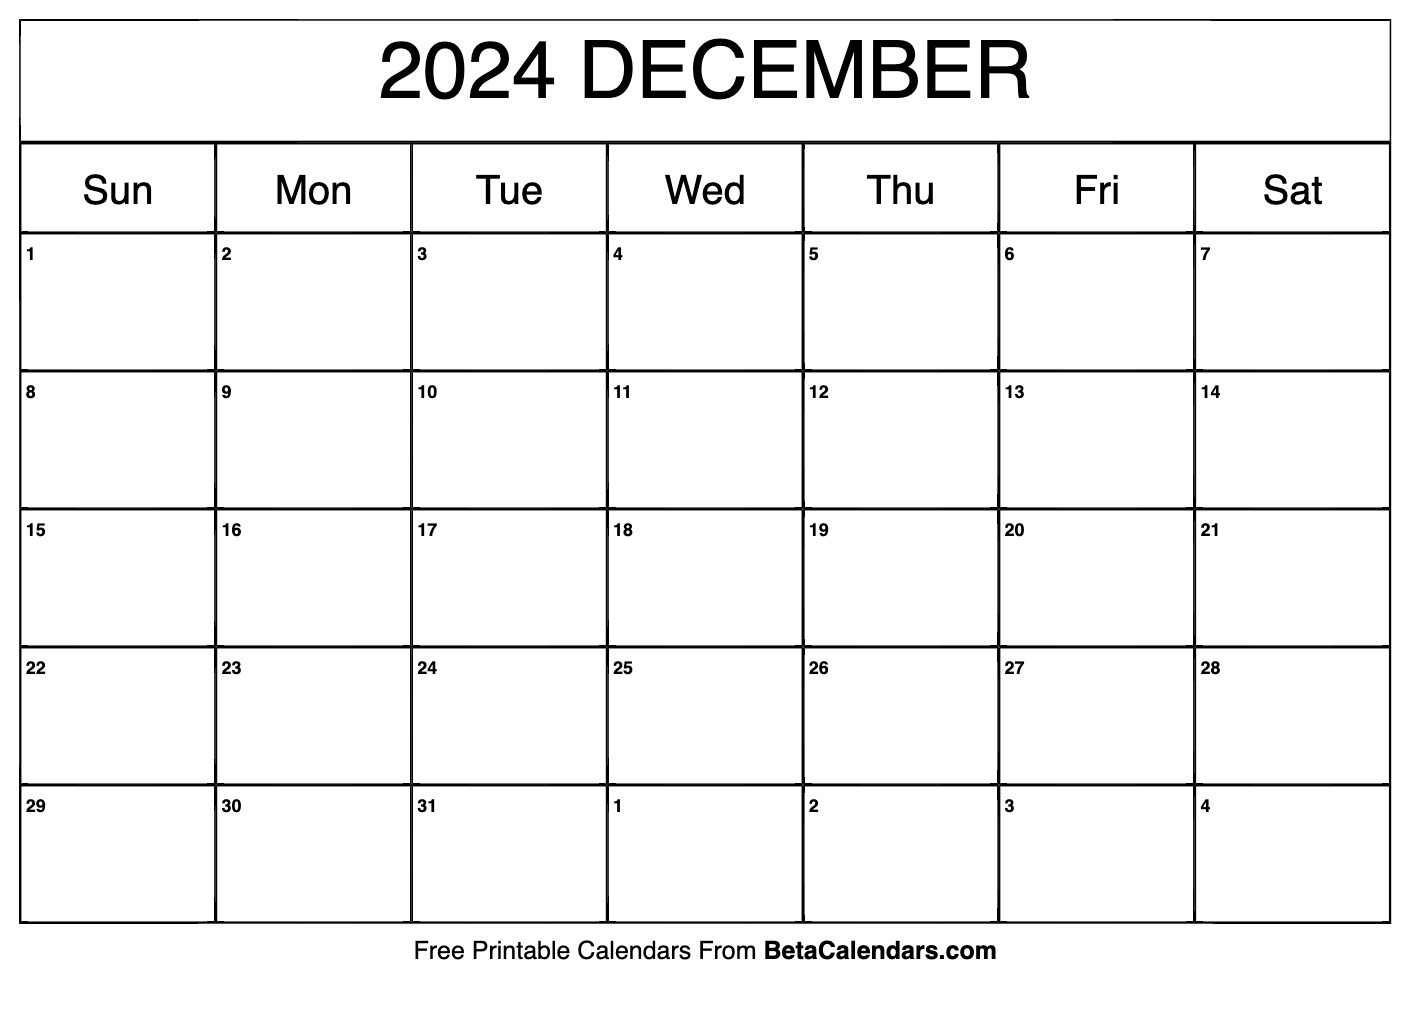 December 2024 Calendar